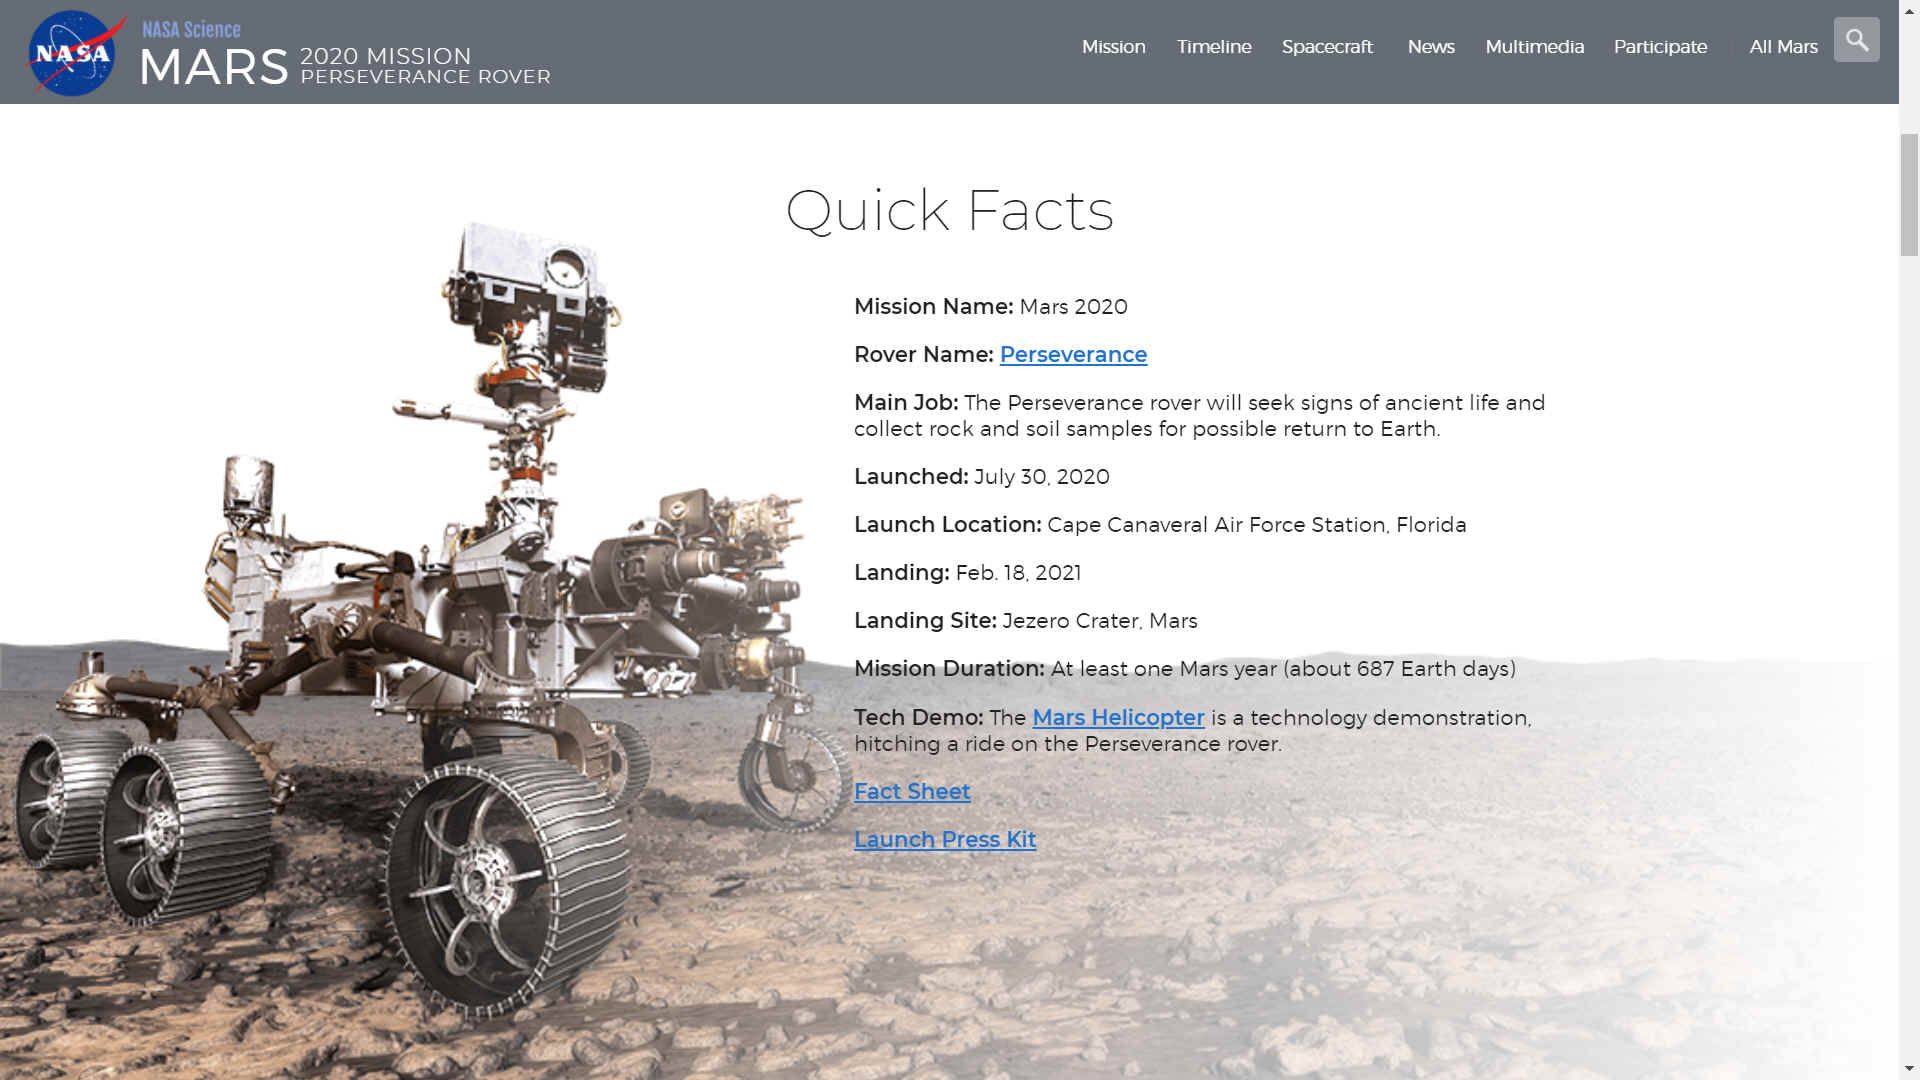 NASA Mars rovercar sized robotic planetary explorer